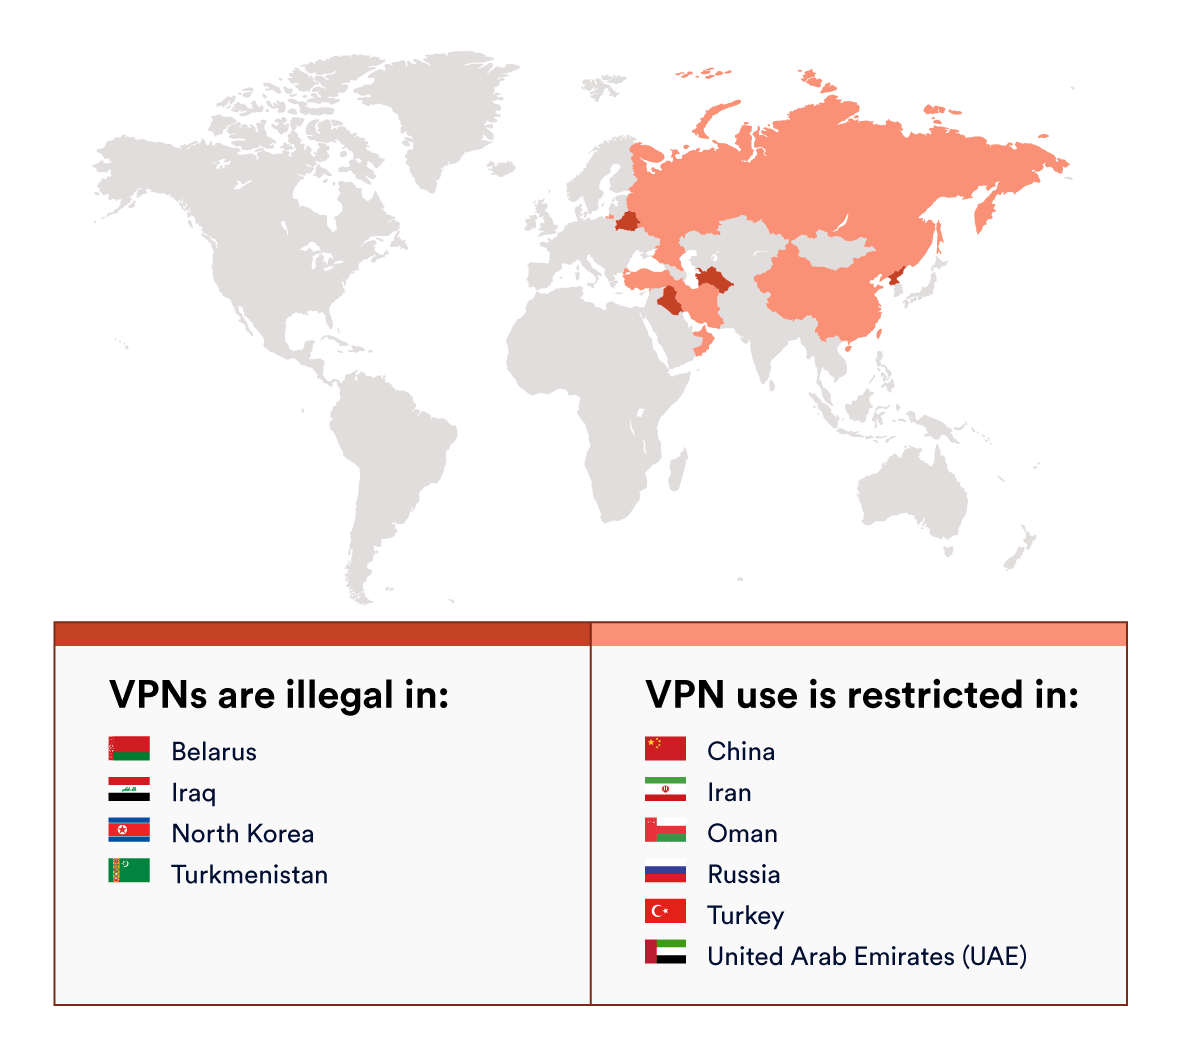 Is it illegal to use a VPN in Turkey?